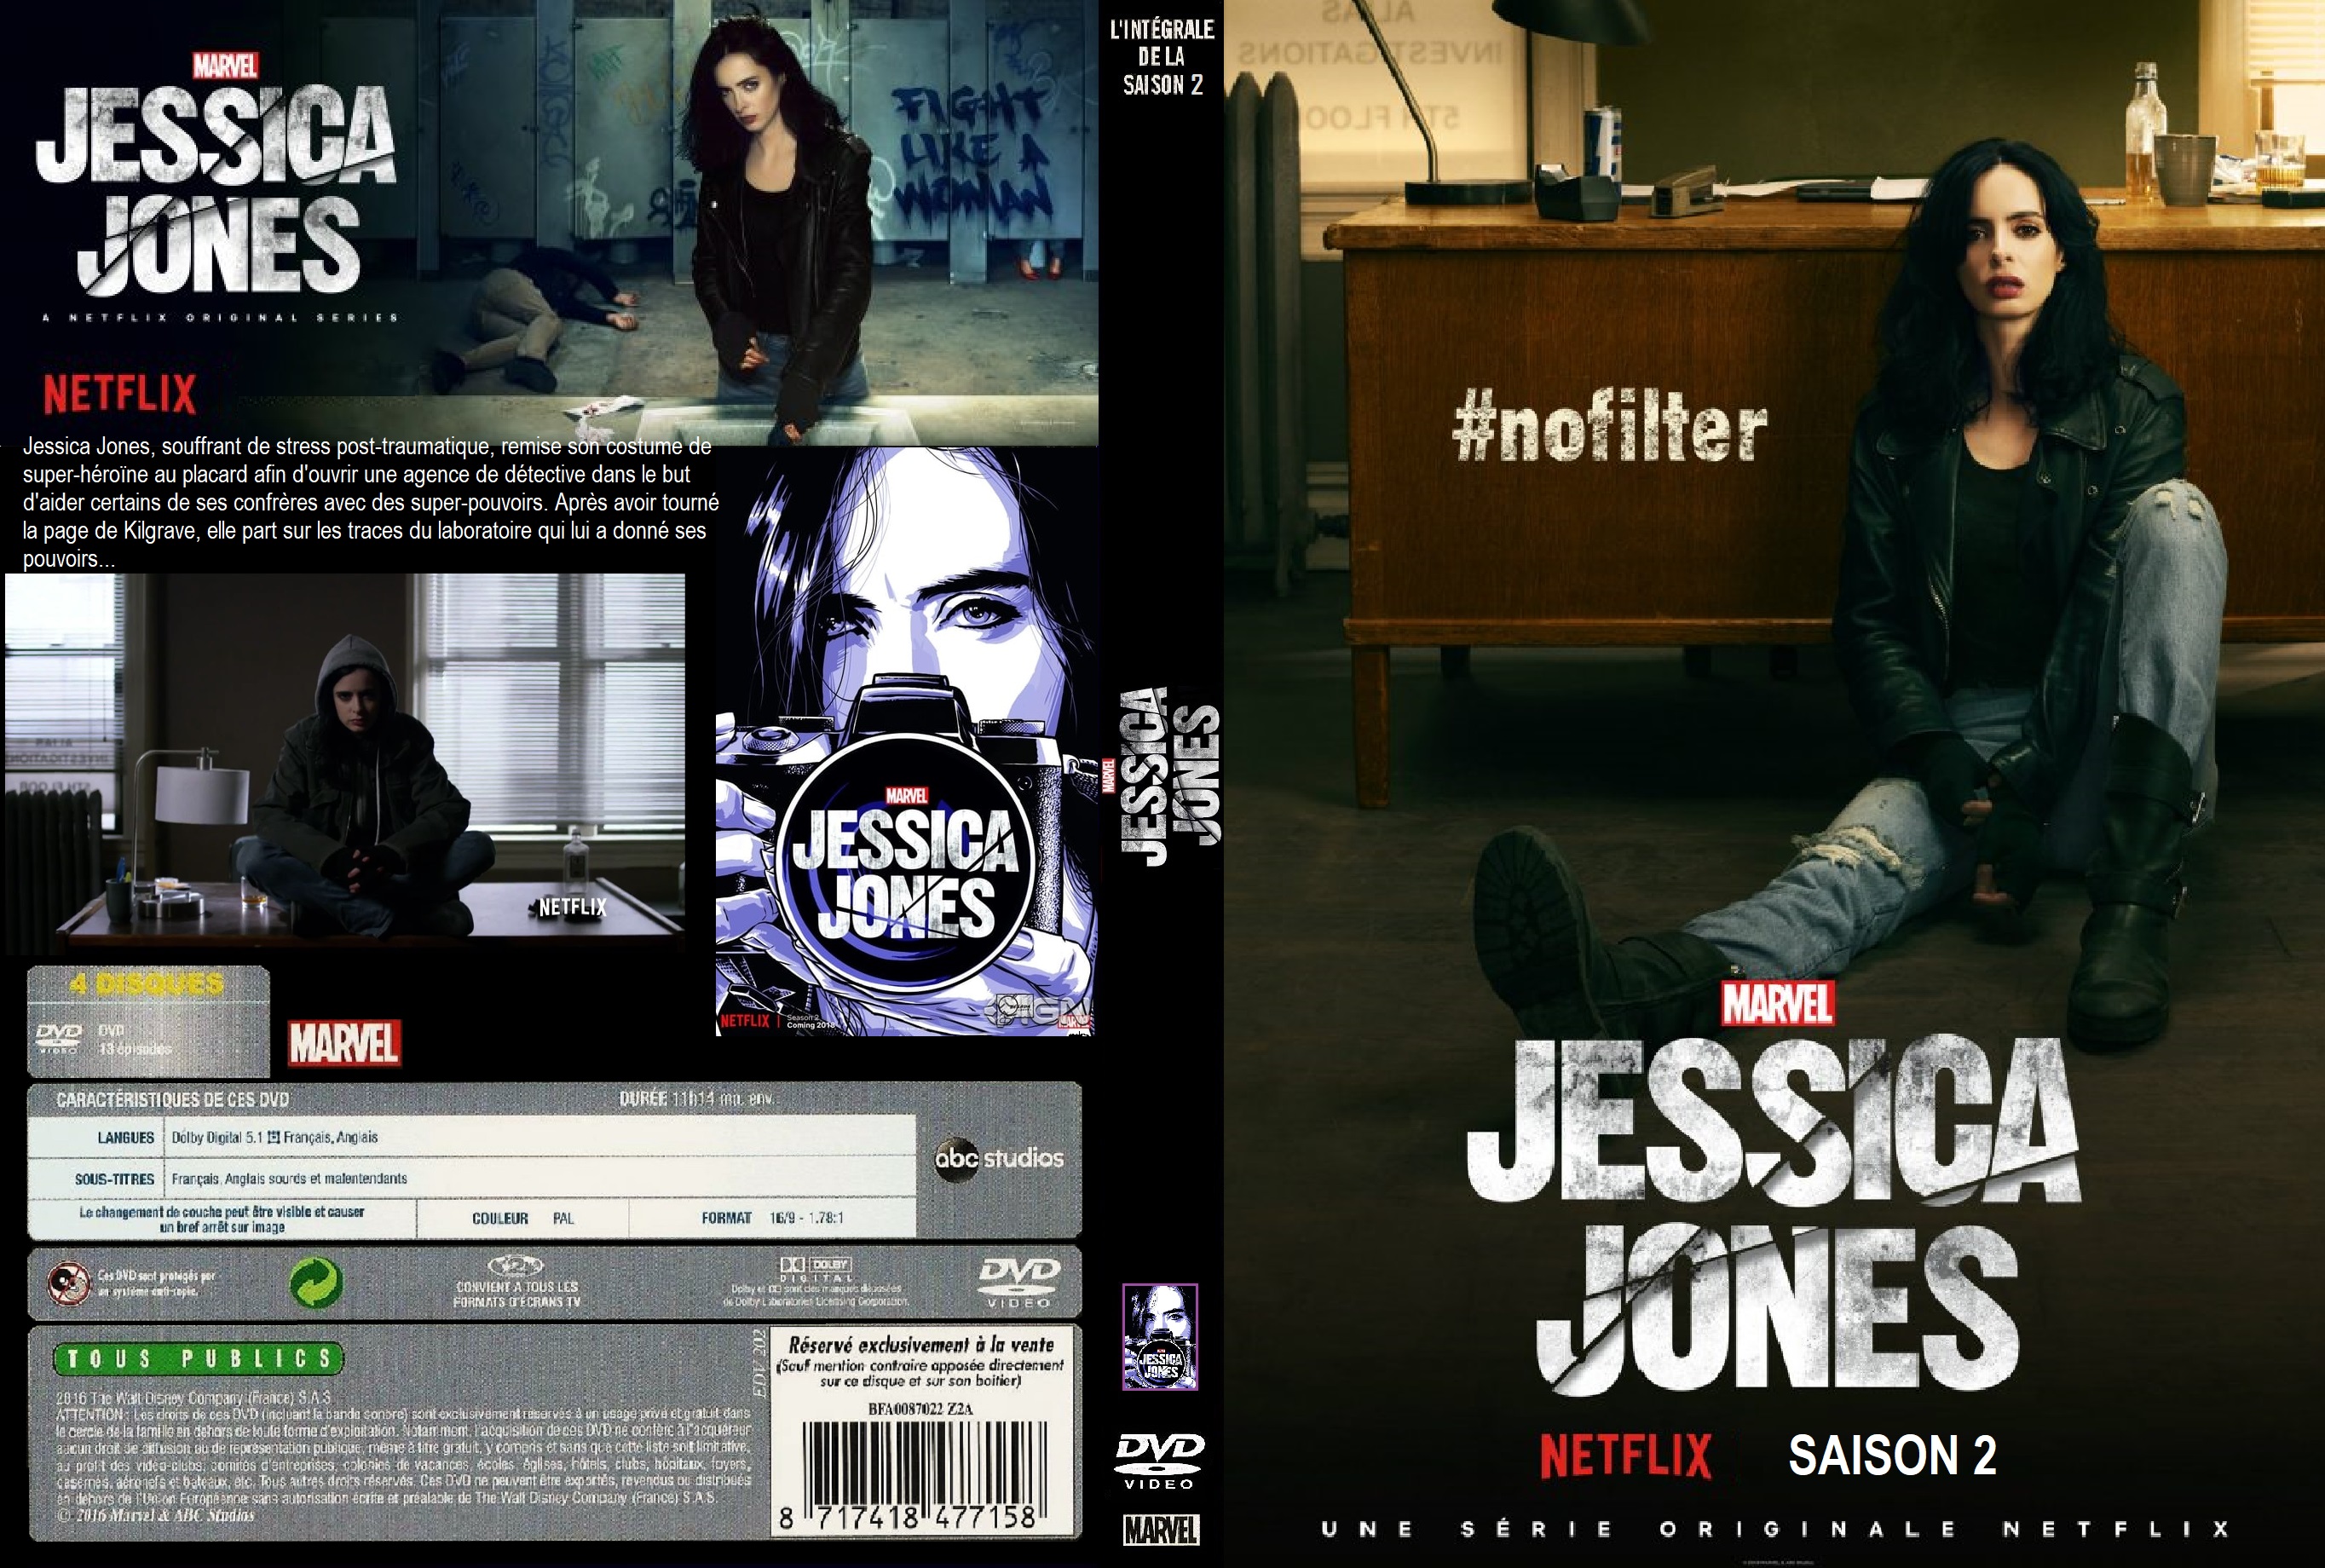 Jaquette DVD Jessica Jones saison 2 custom